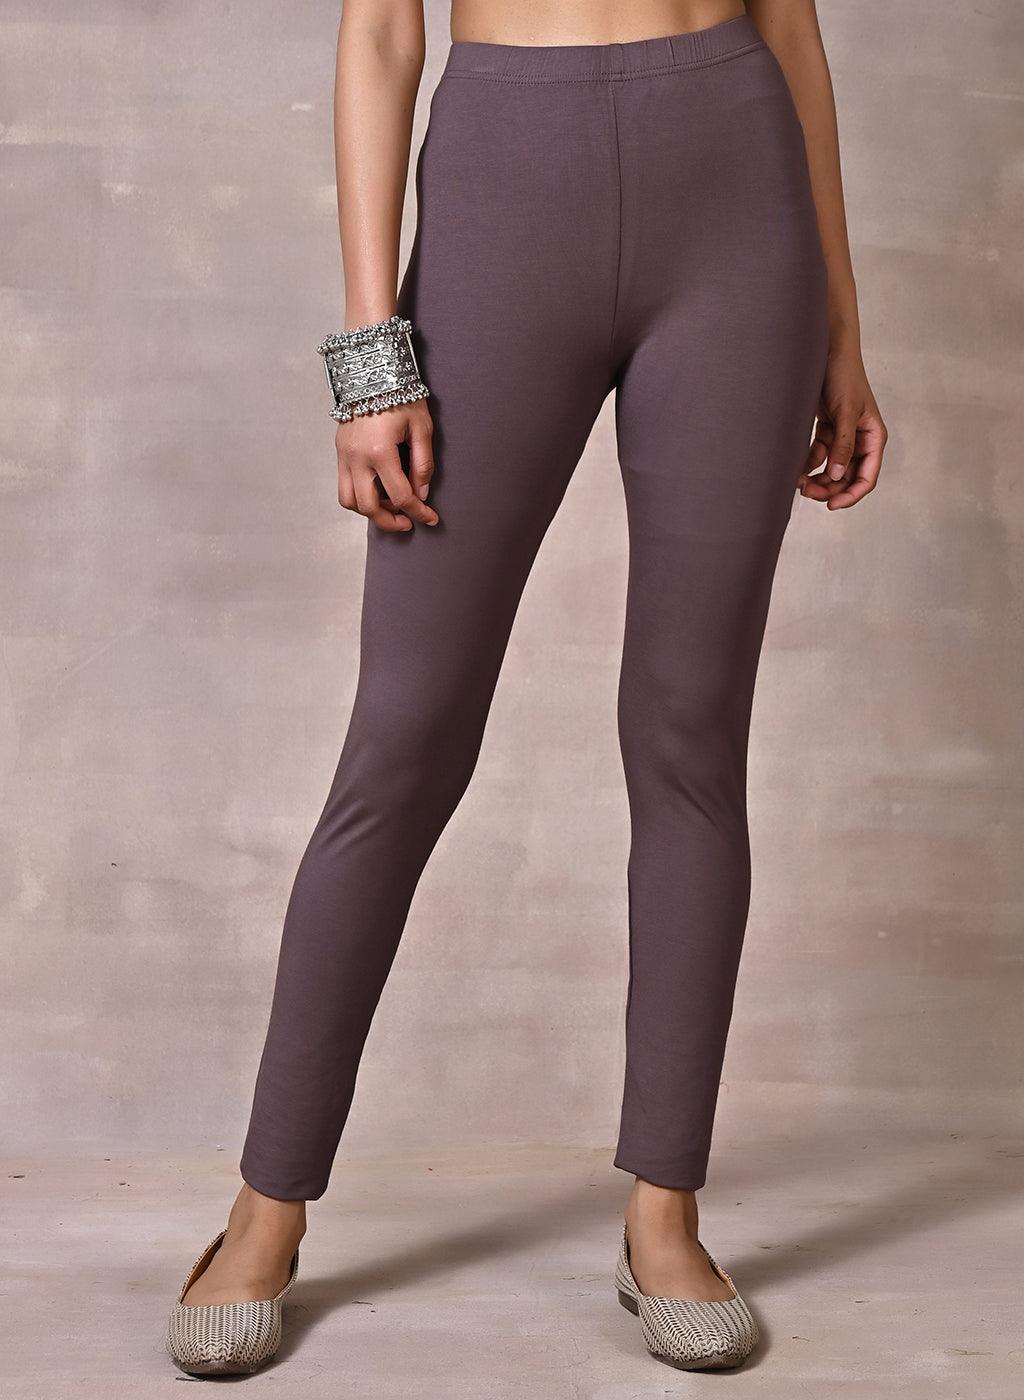 Design Details For Bottoms  Threads  WeRIndia  Women trousers design  Womens pants design Fashion pants